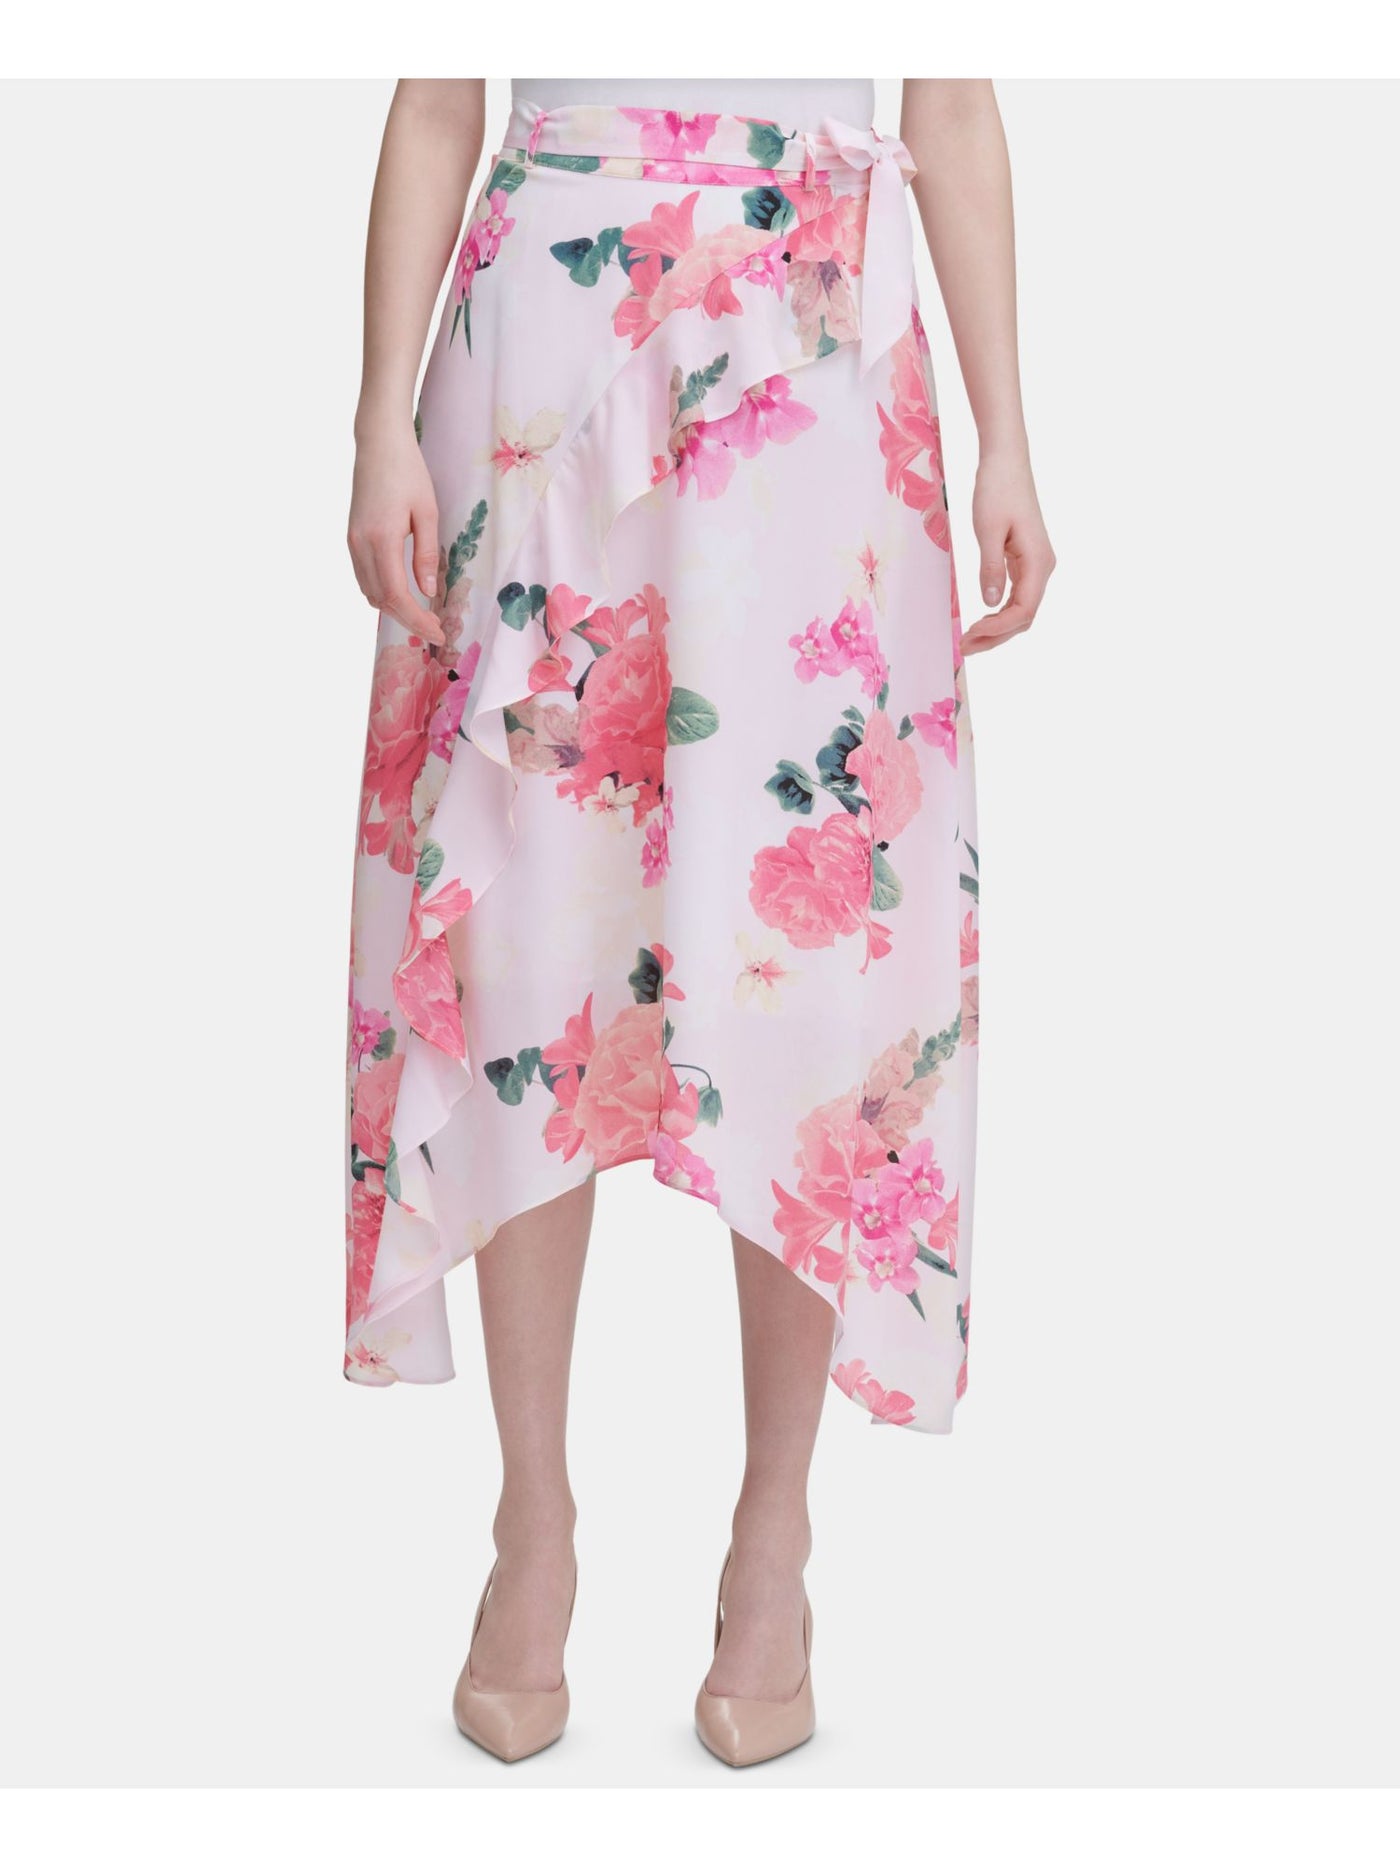 CALVIN KLEIN Womens Pink Floral Layered Skirt Size: 8